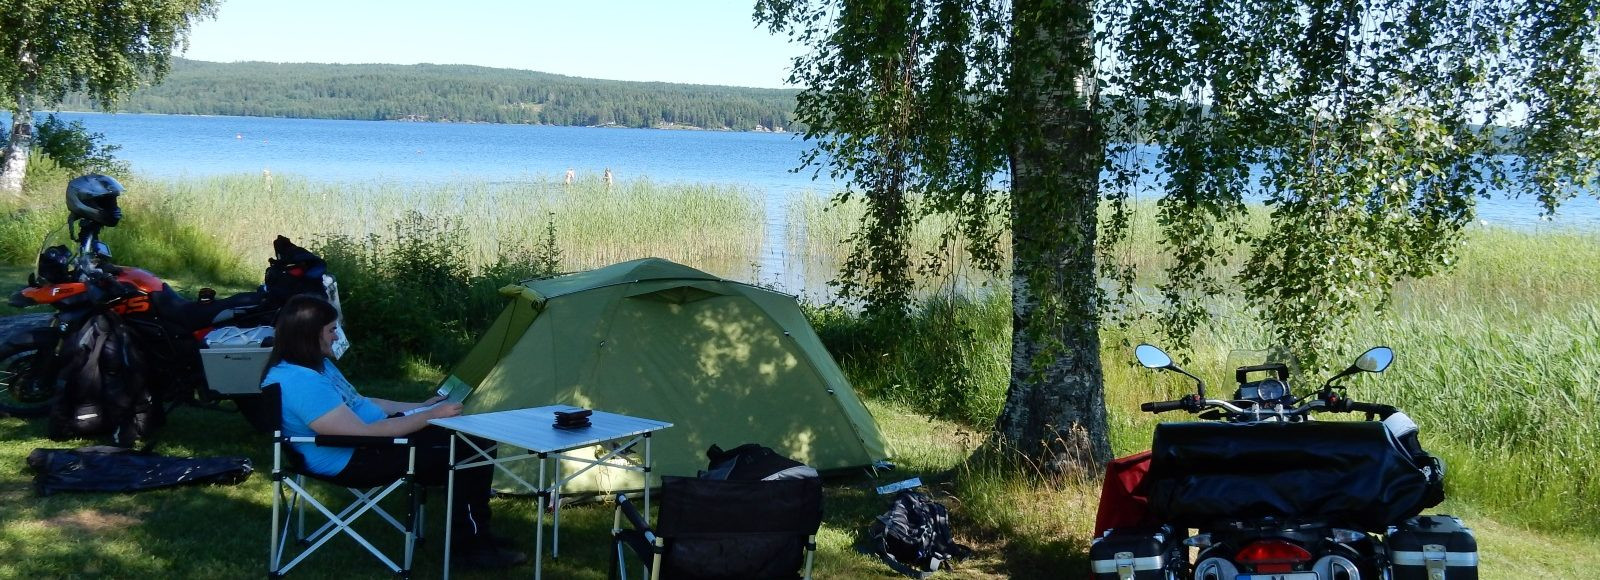 Unser Campingplatz nahe Eda in Schweden.